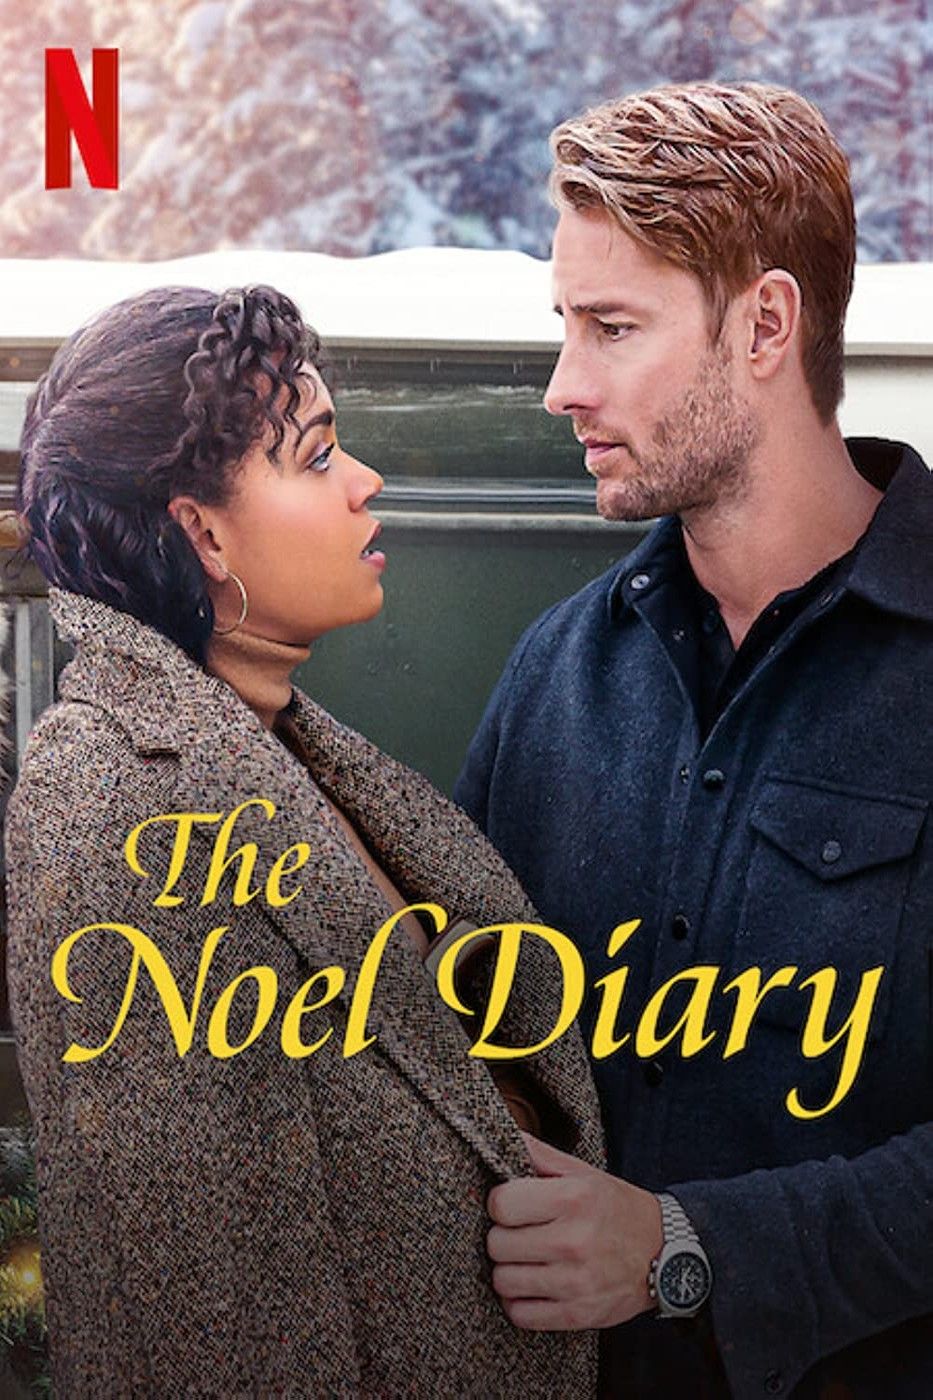 movie reviews the noel diary